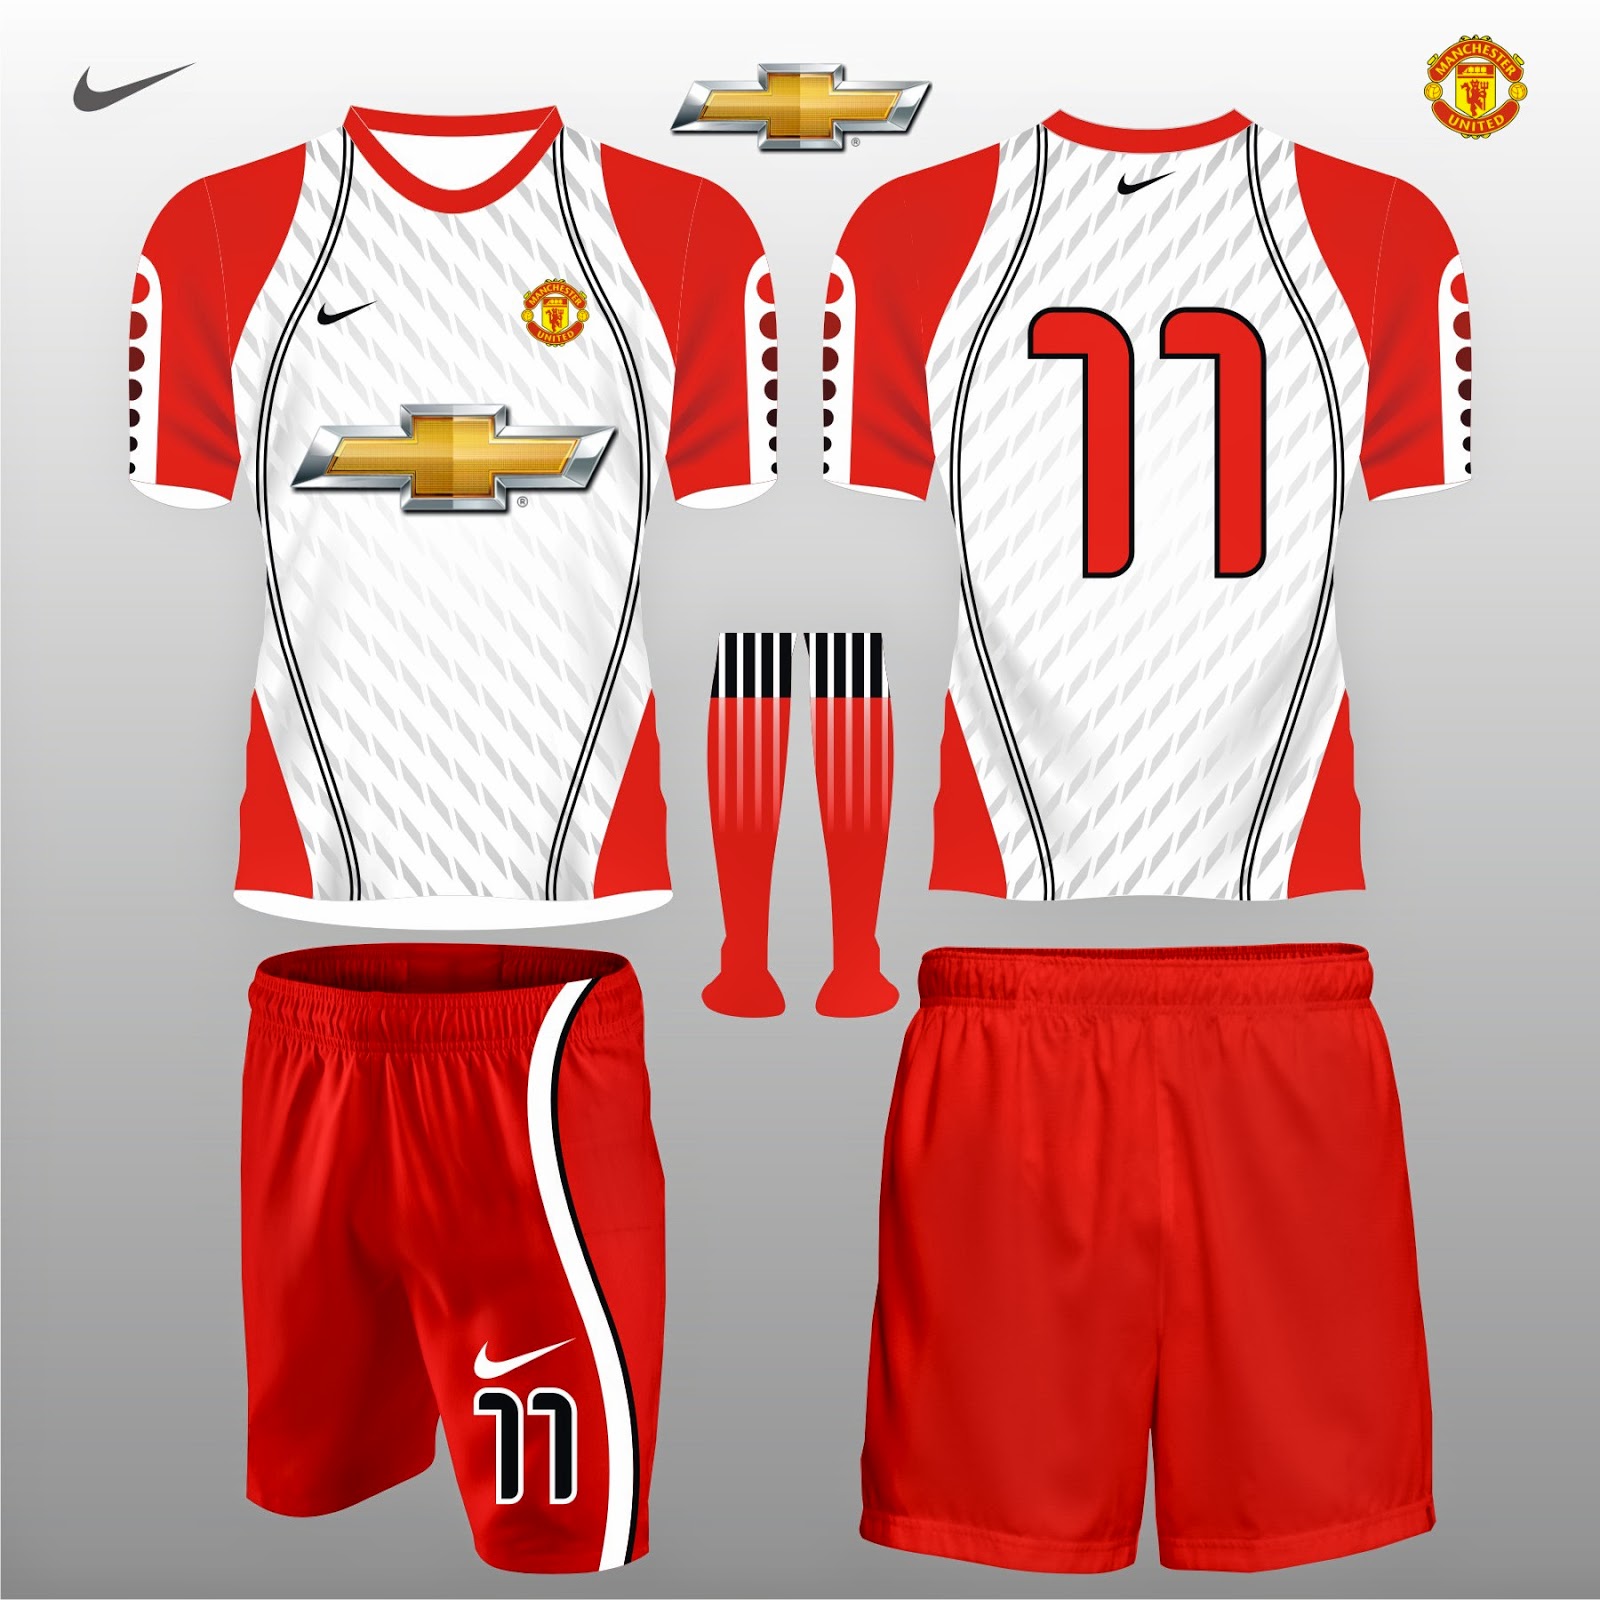 Football Kit Design Master: January 2015